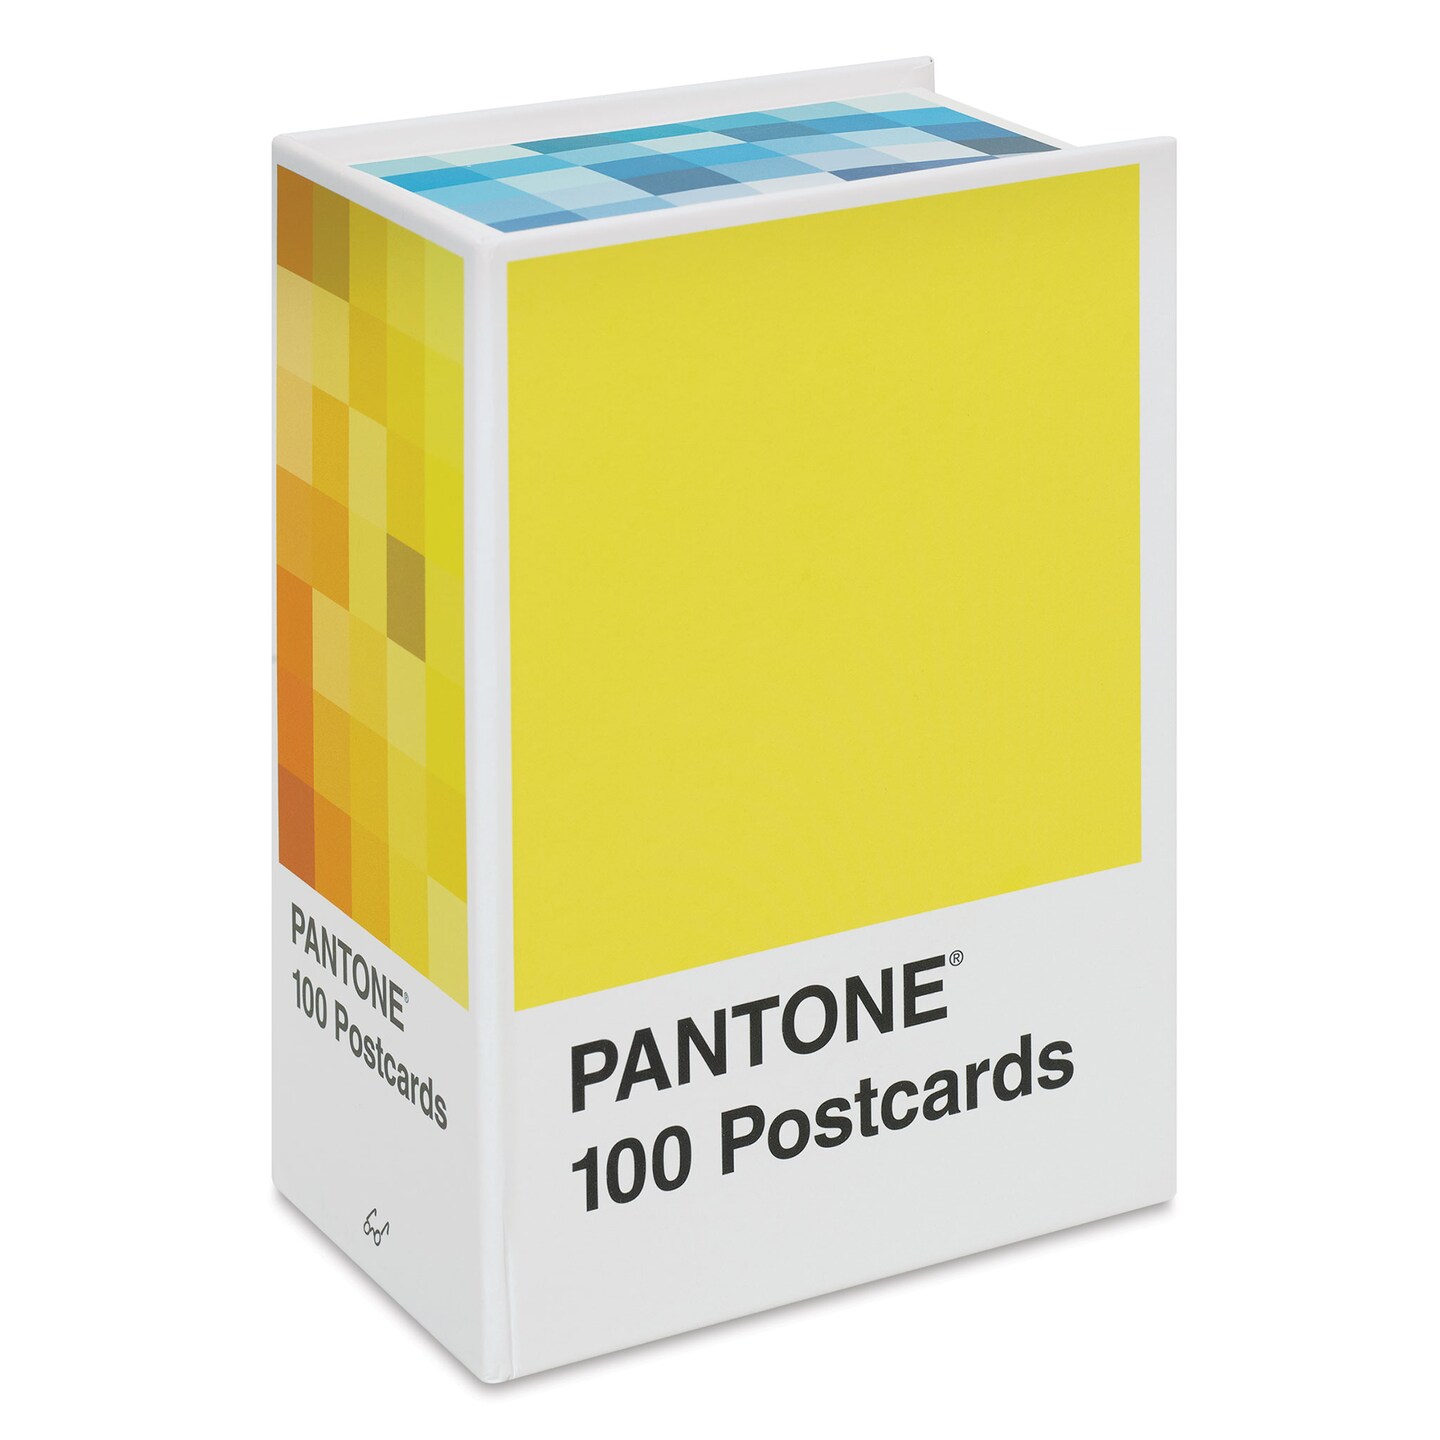 Pantone 100 Postcards Box